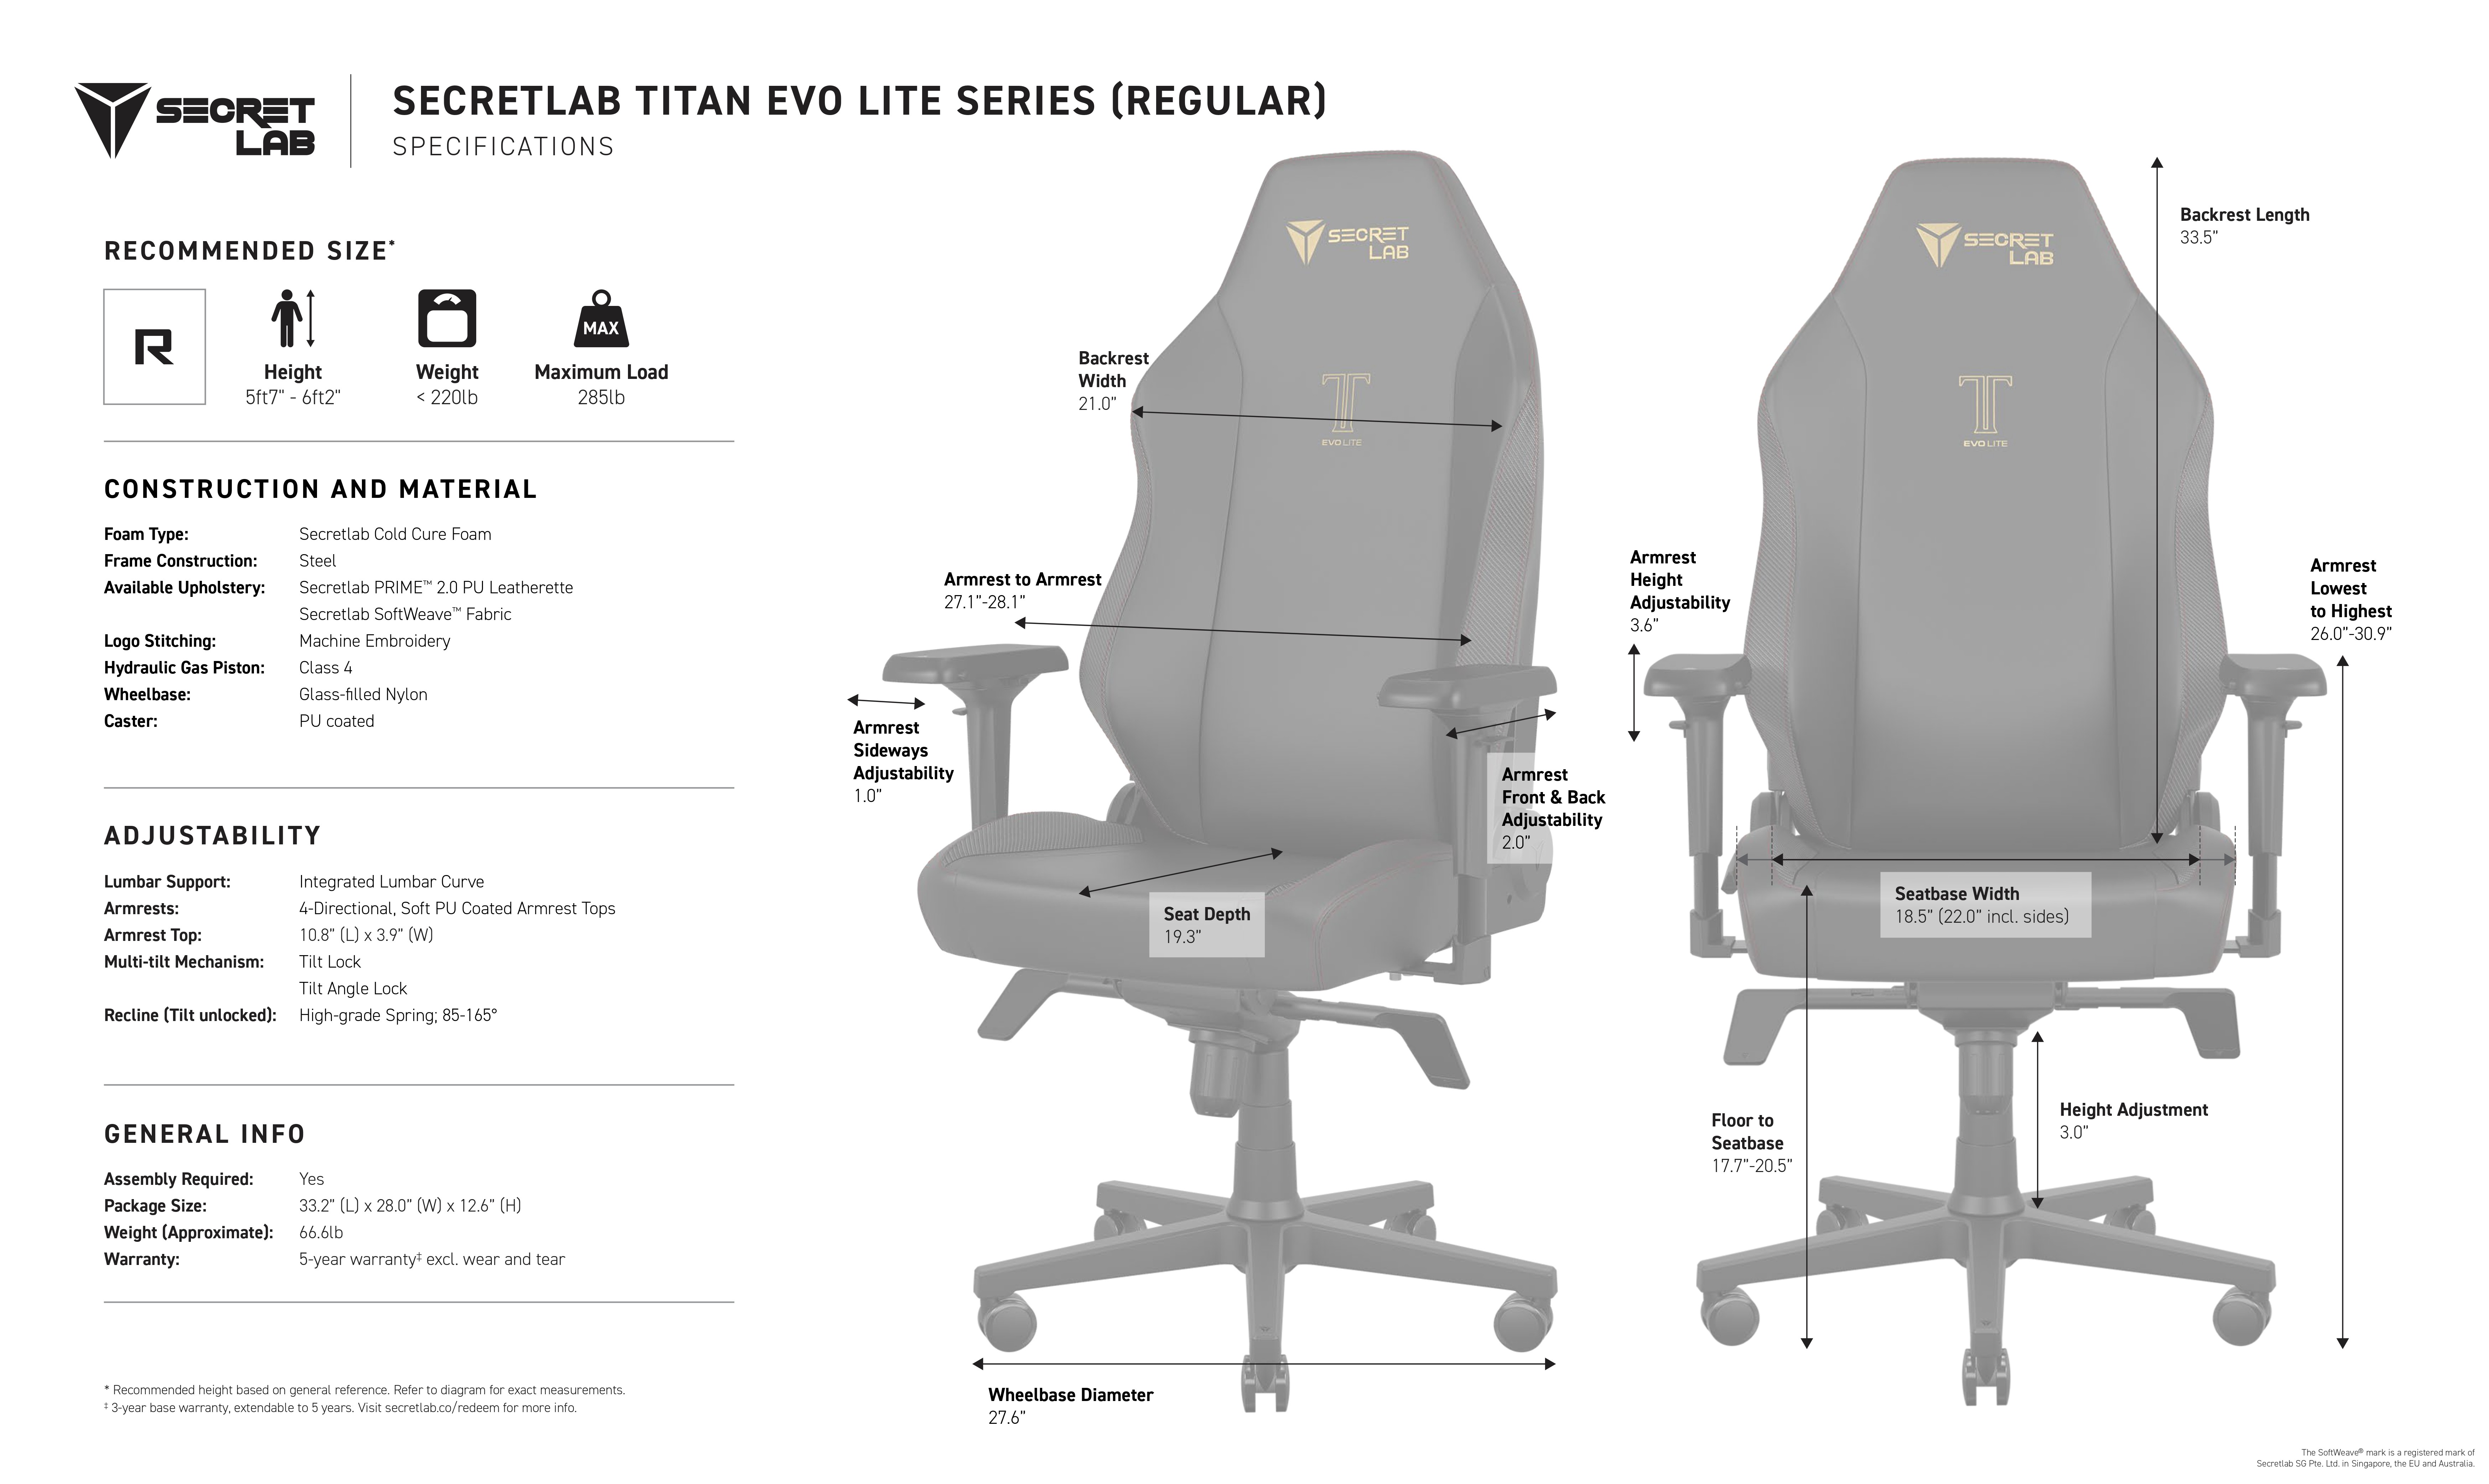 Introducing the all-new Secretlab Classics: The Gold Standard of gaming  seats - Secretlab Blog